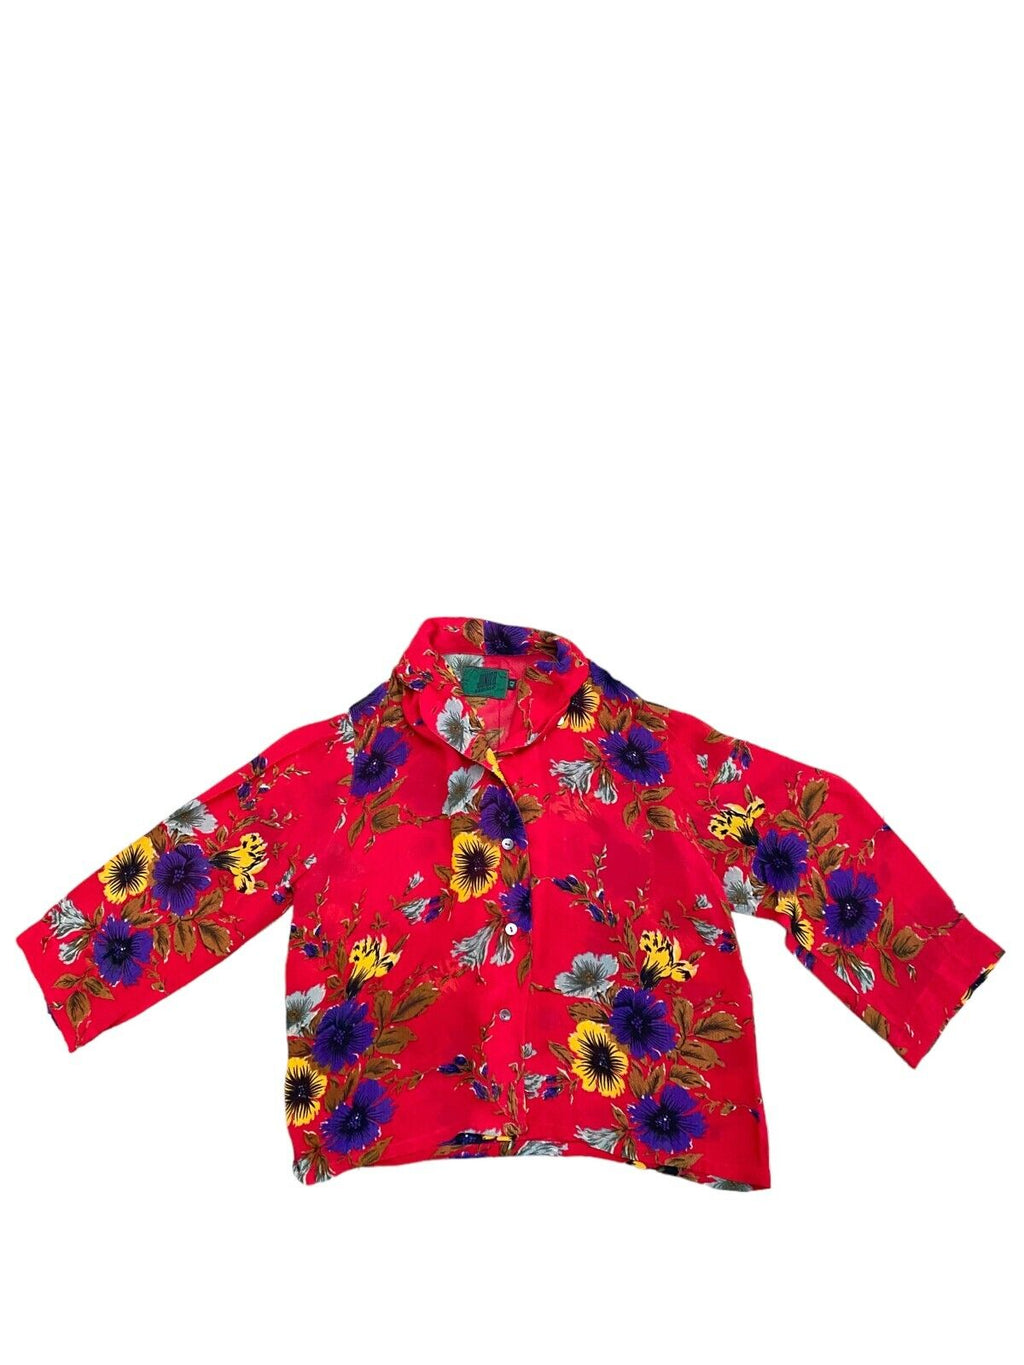 Vintage Red Floral shirt  Size 42 fits M